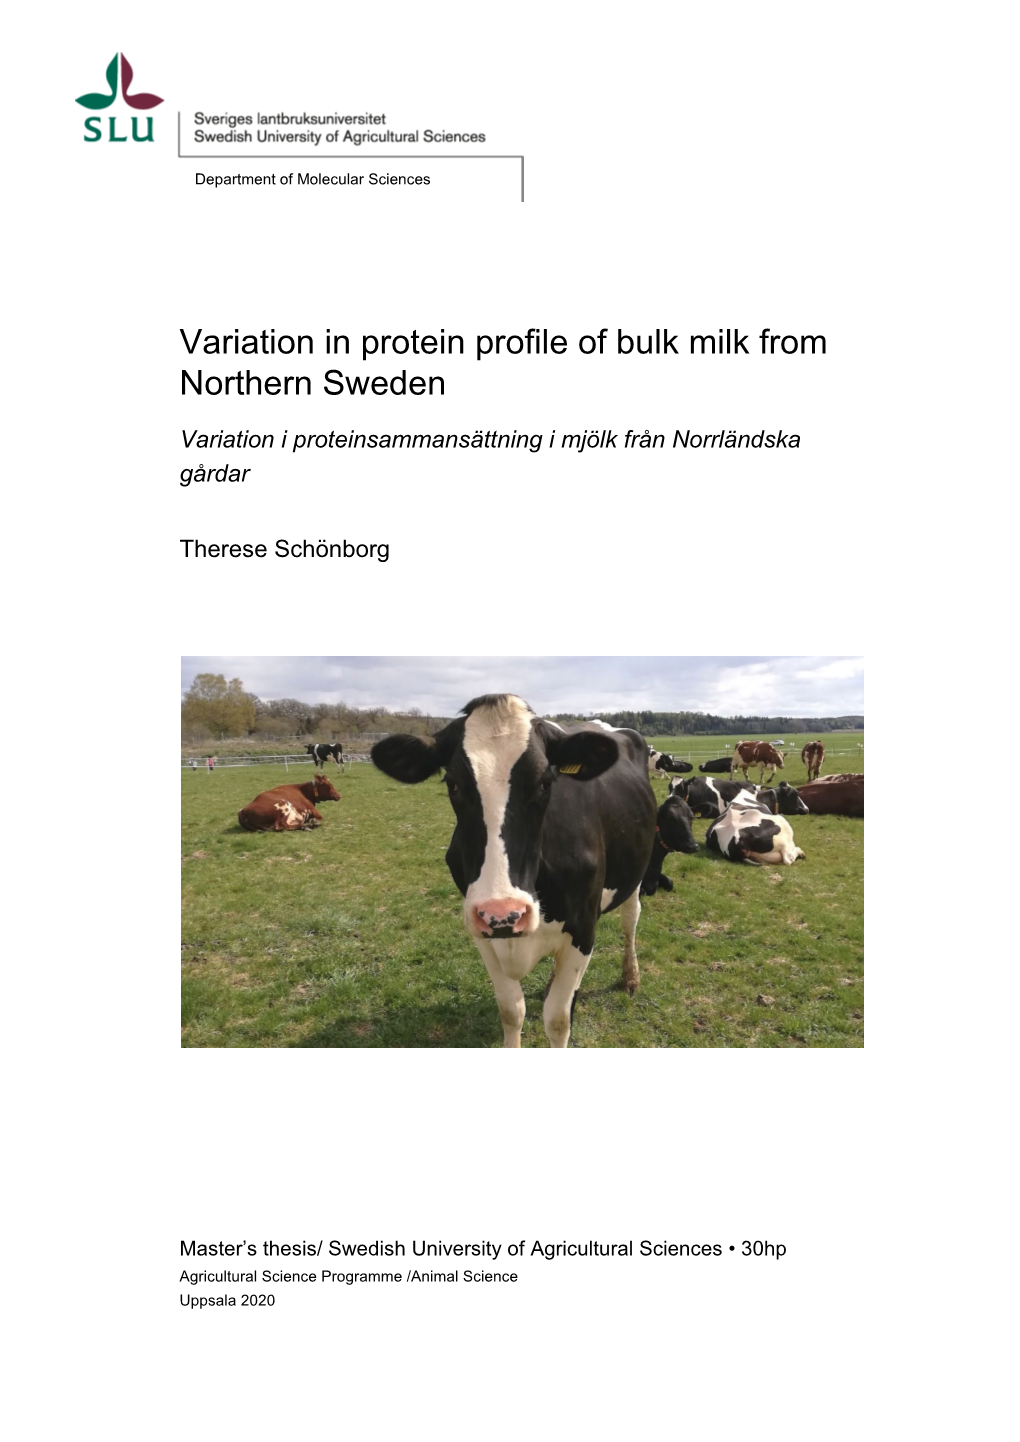 Variation in Protein Profile of Bulk Milk from Northern Sweden